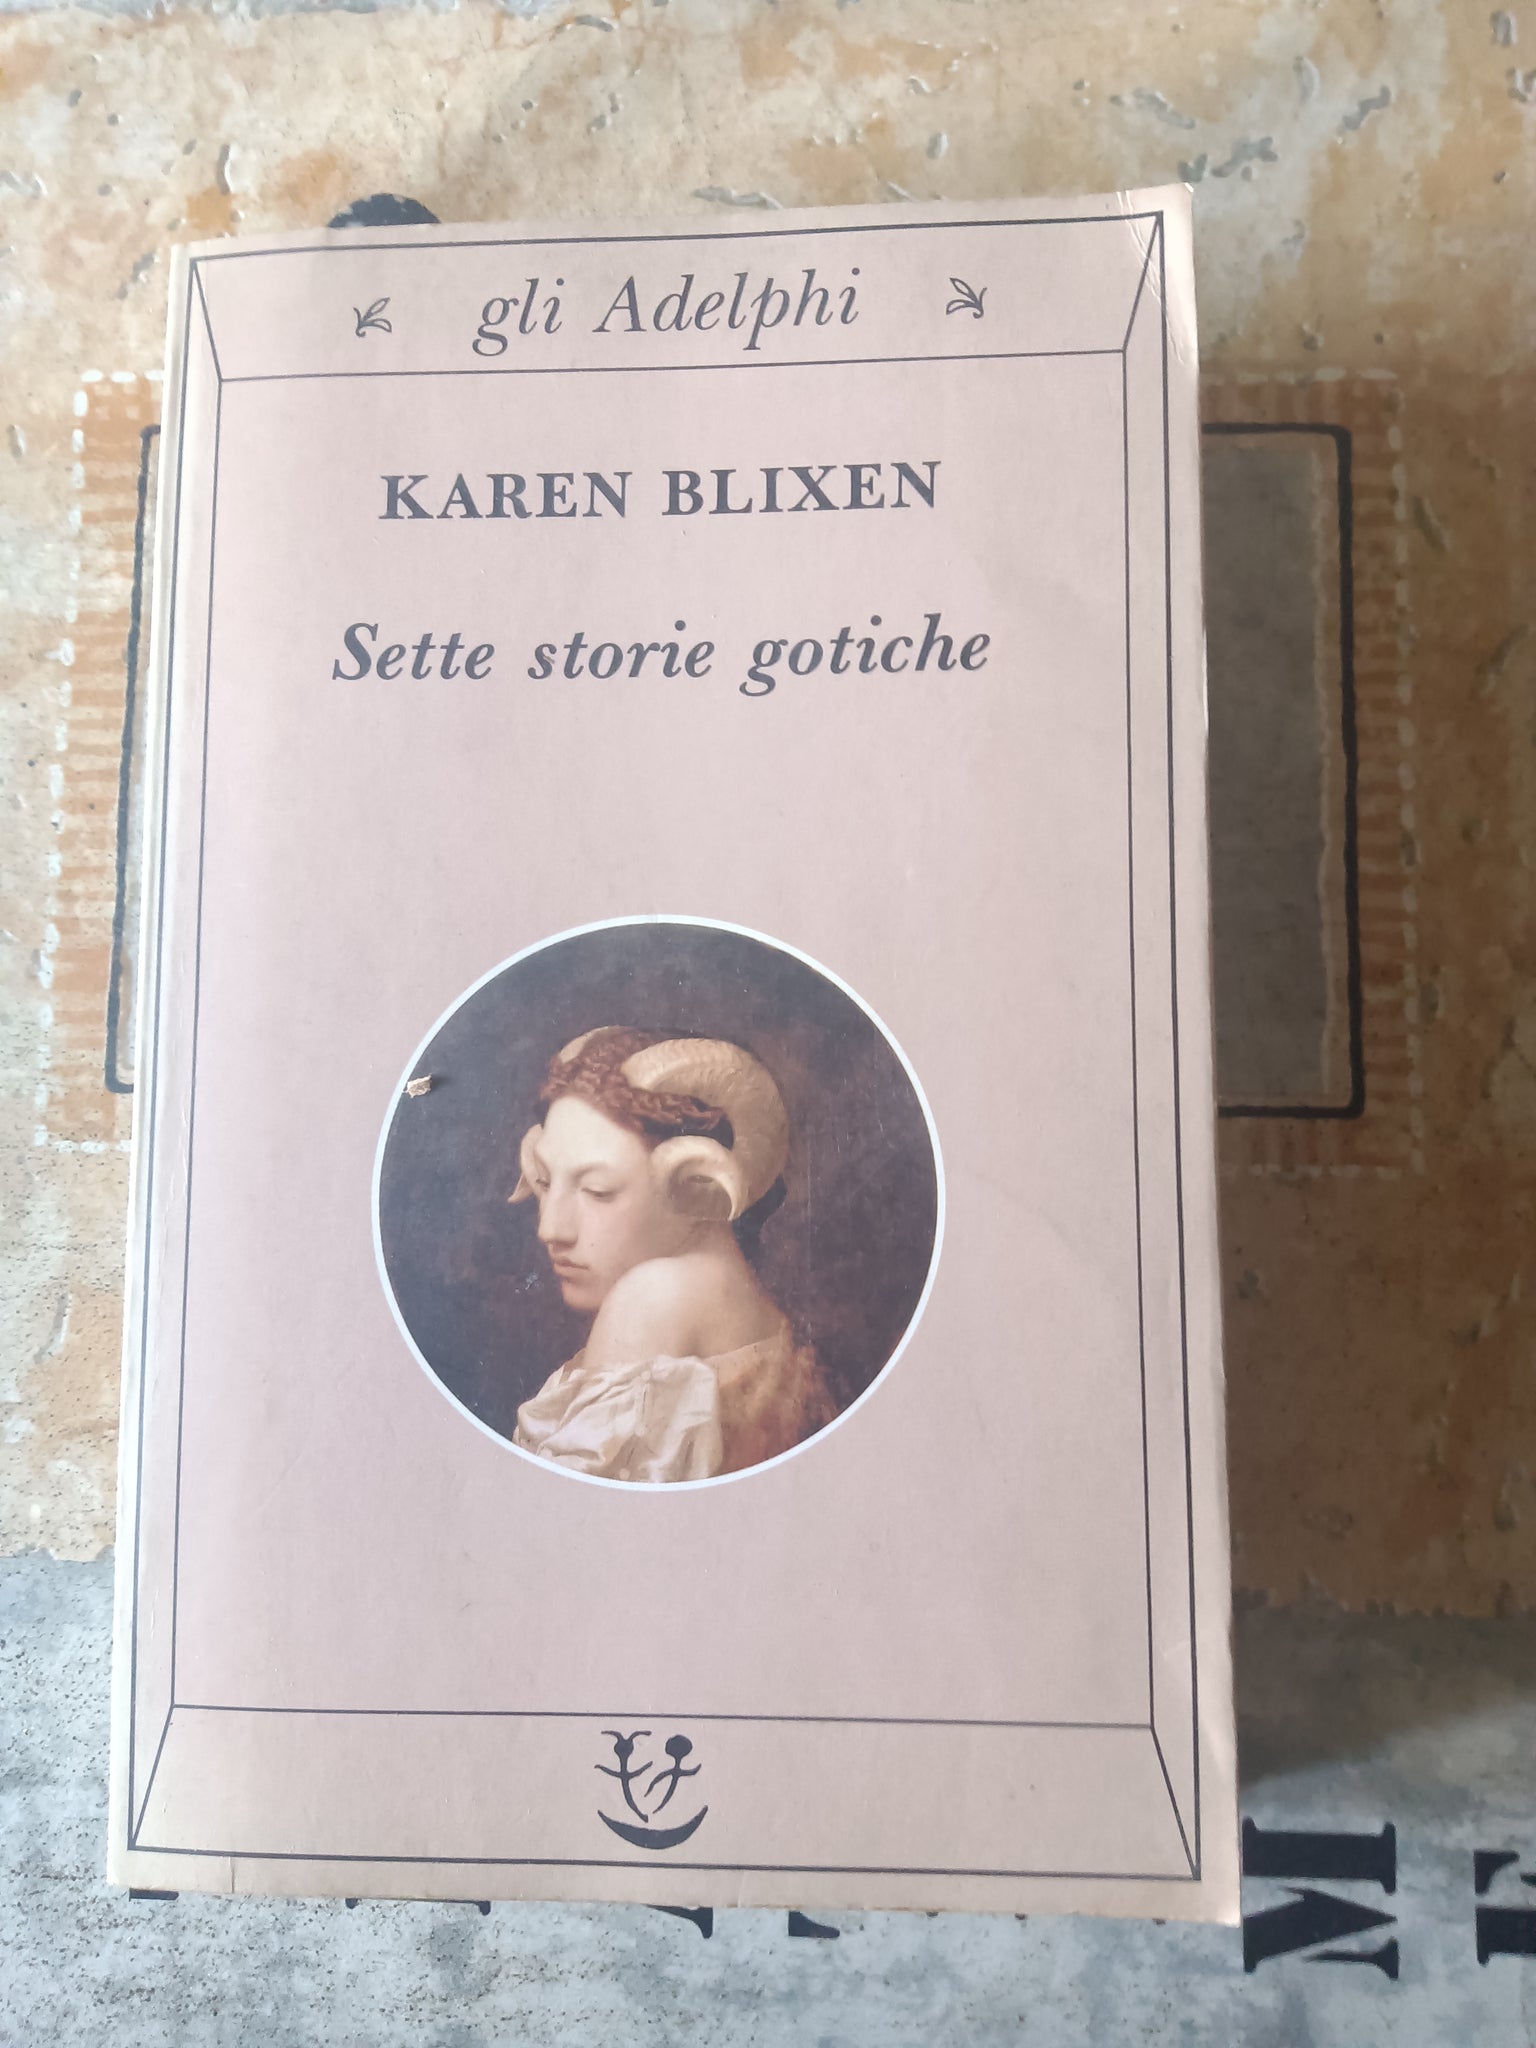 Sette storie gotiche | Karen Blixen - Adelphi